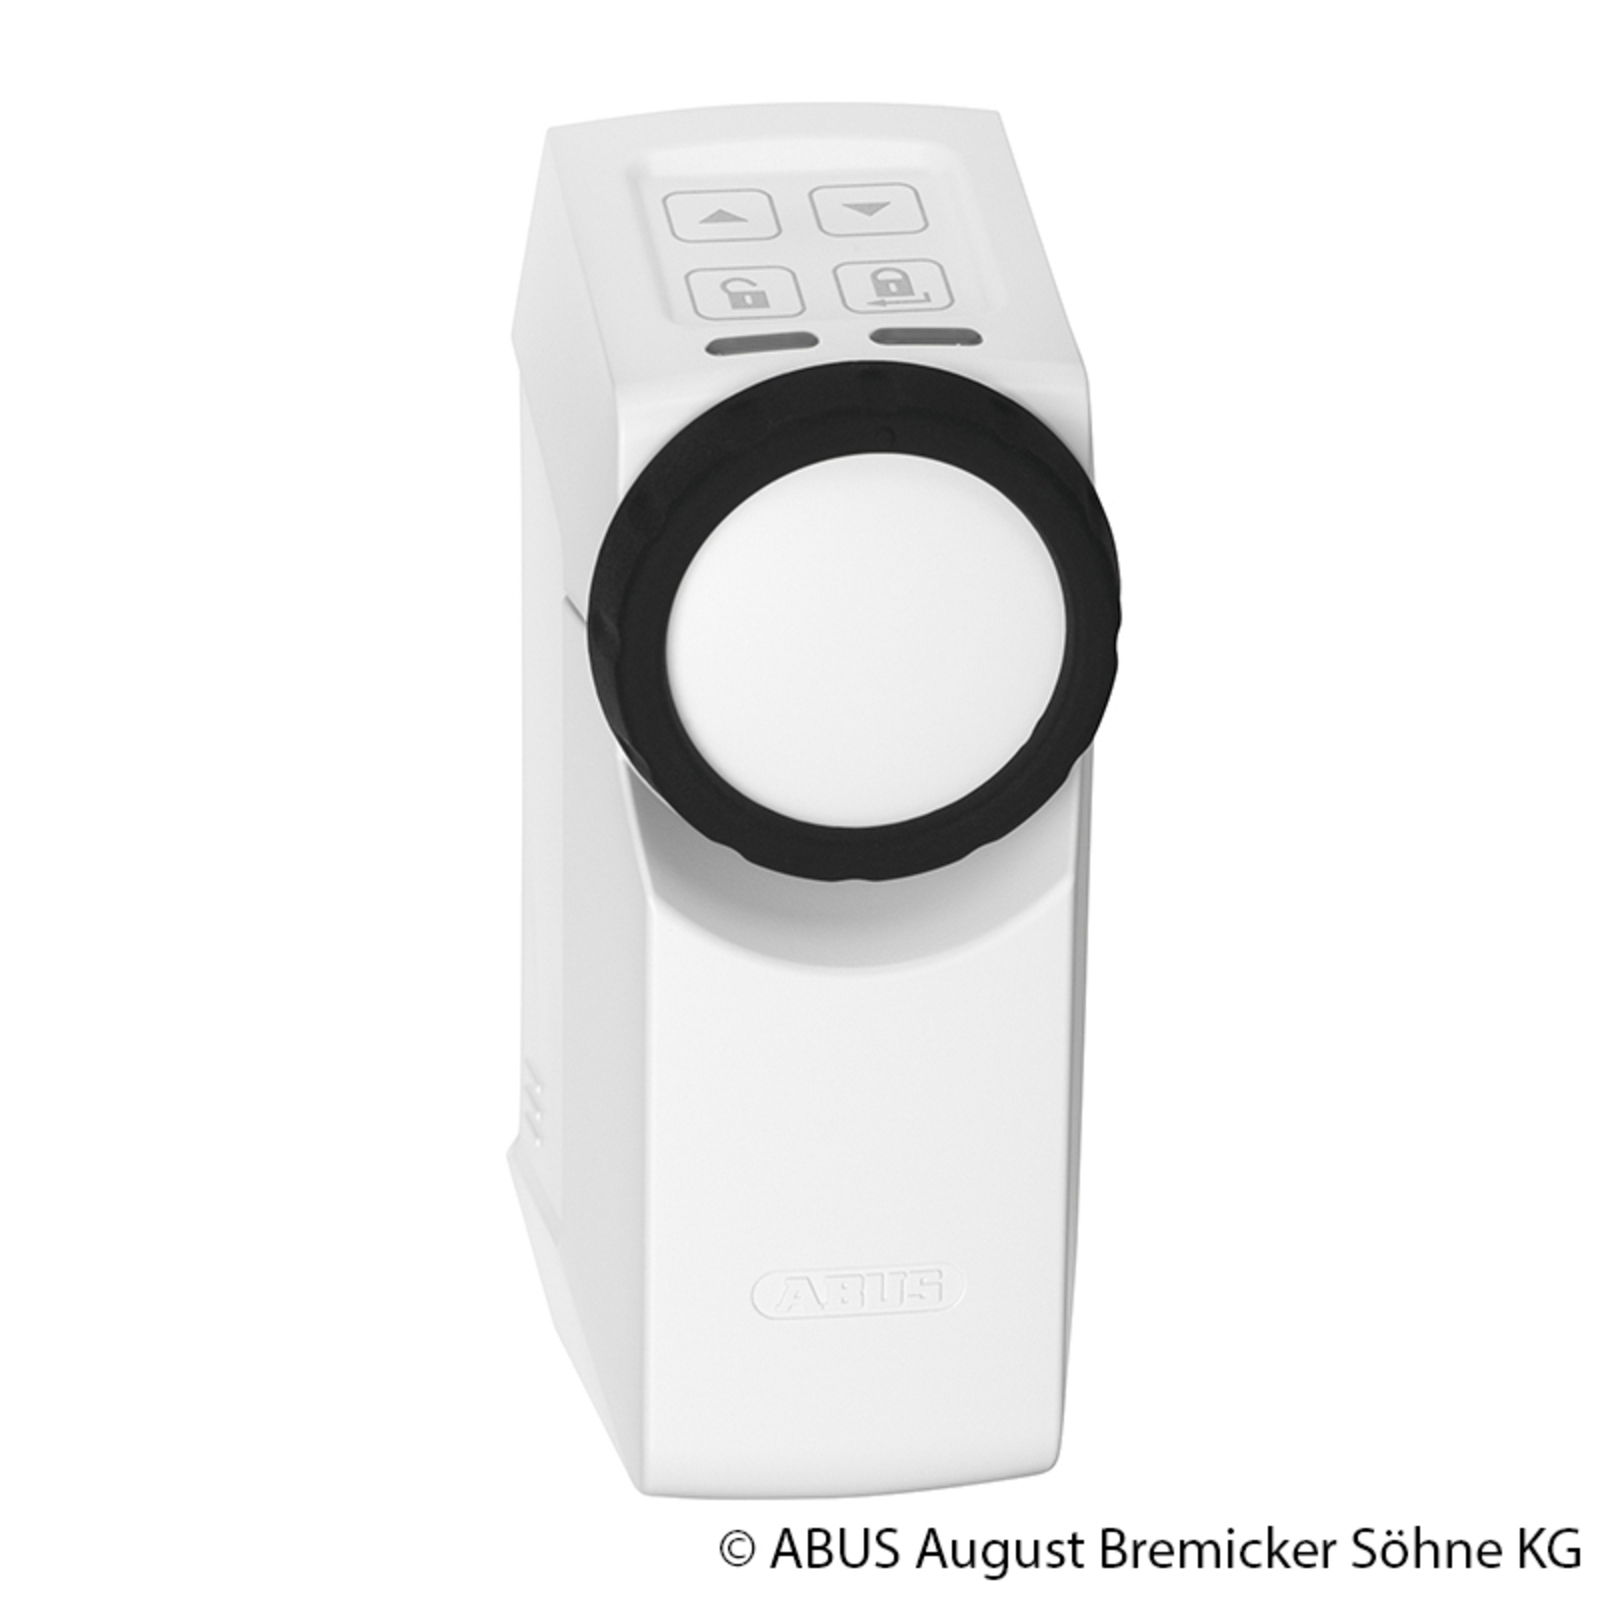 ABUS Z-Wave Türschlossantrieb HomeTec Pro, weiß